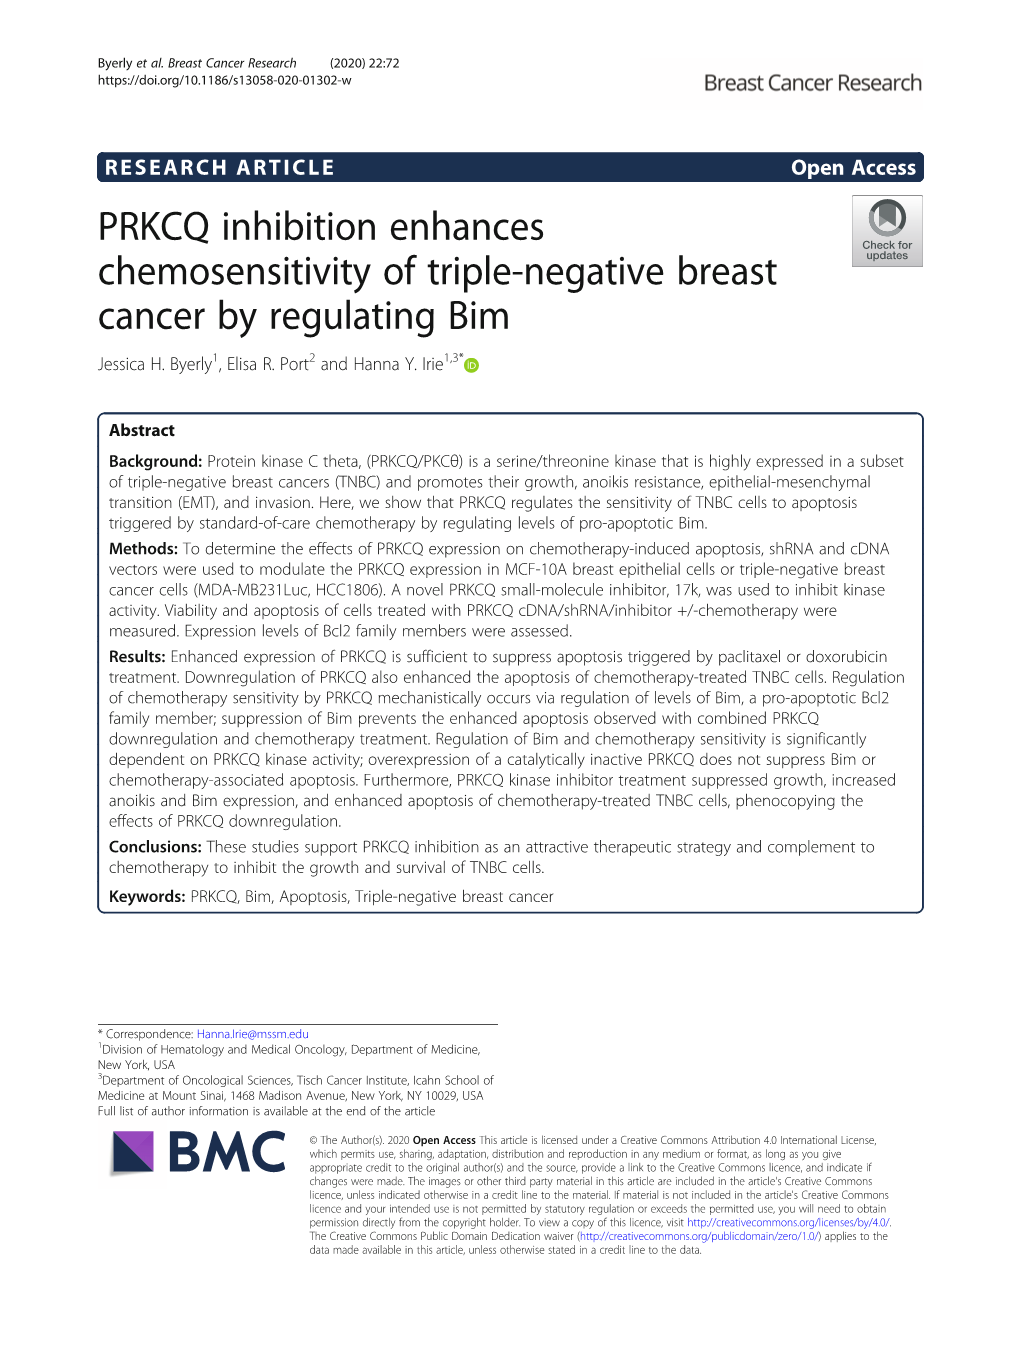 PRKCQ Inhibition Enhances Chemosensitivity of Triple-Negative Breast Cancer by Regulating Bim Jessica H